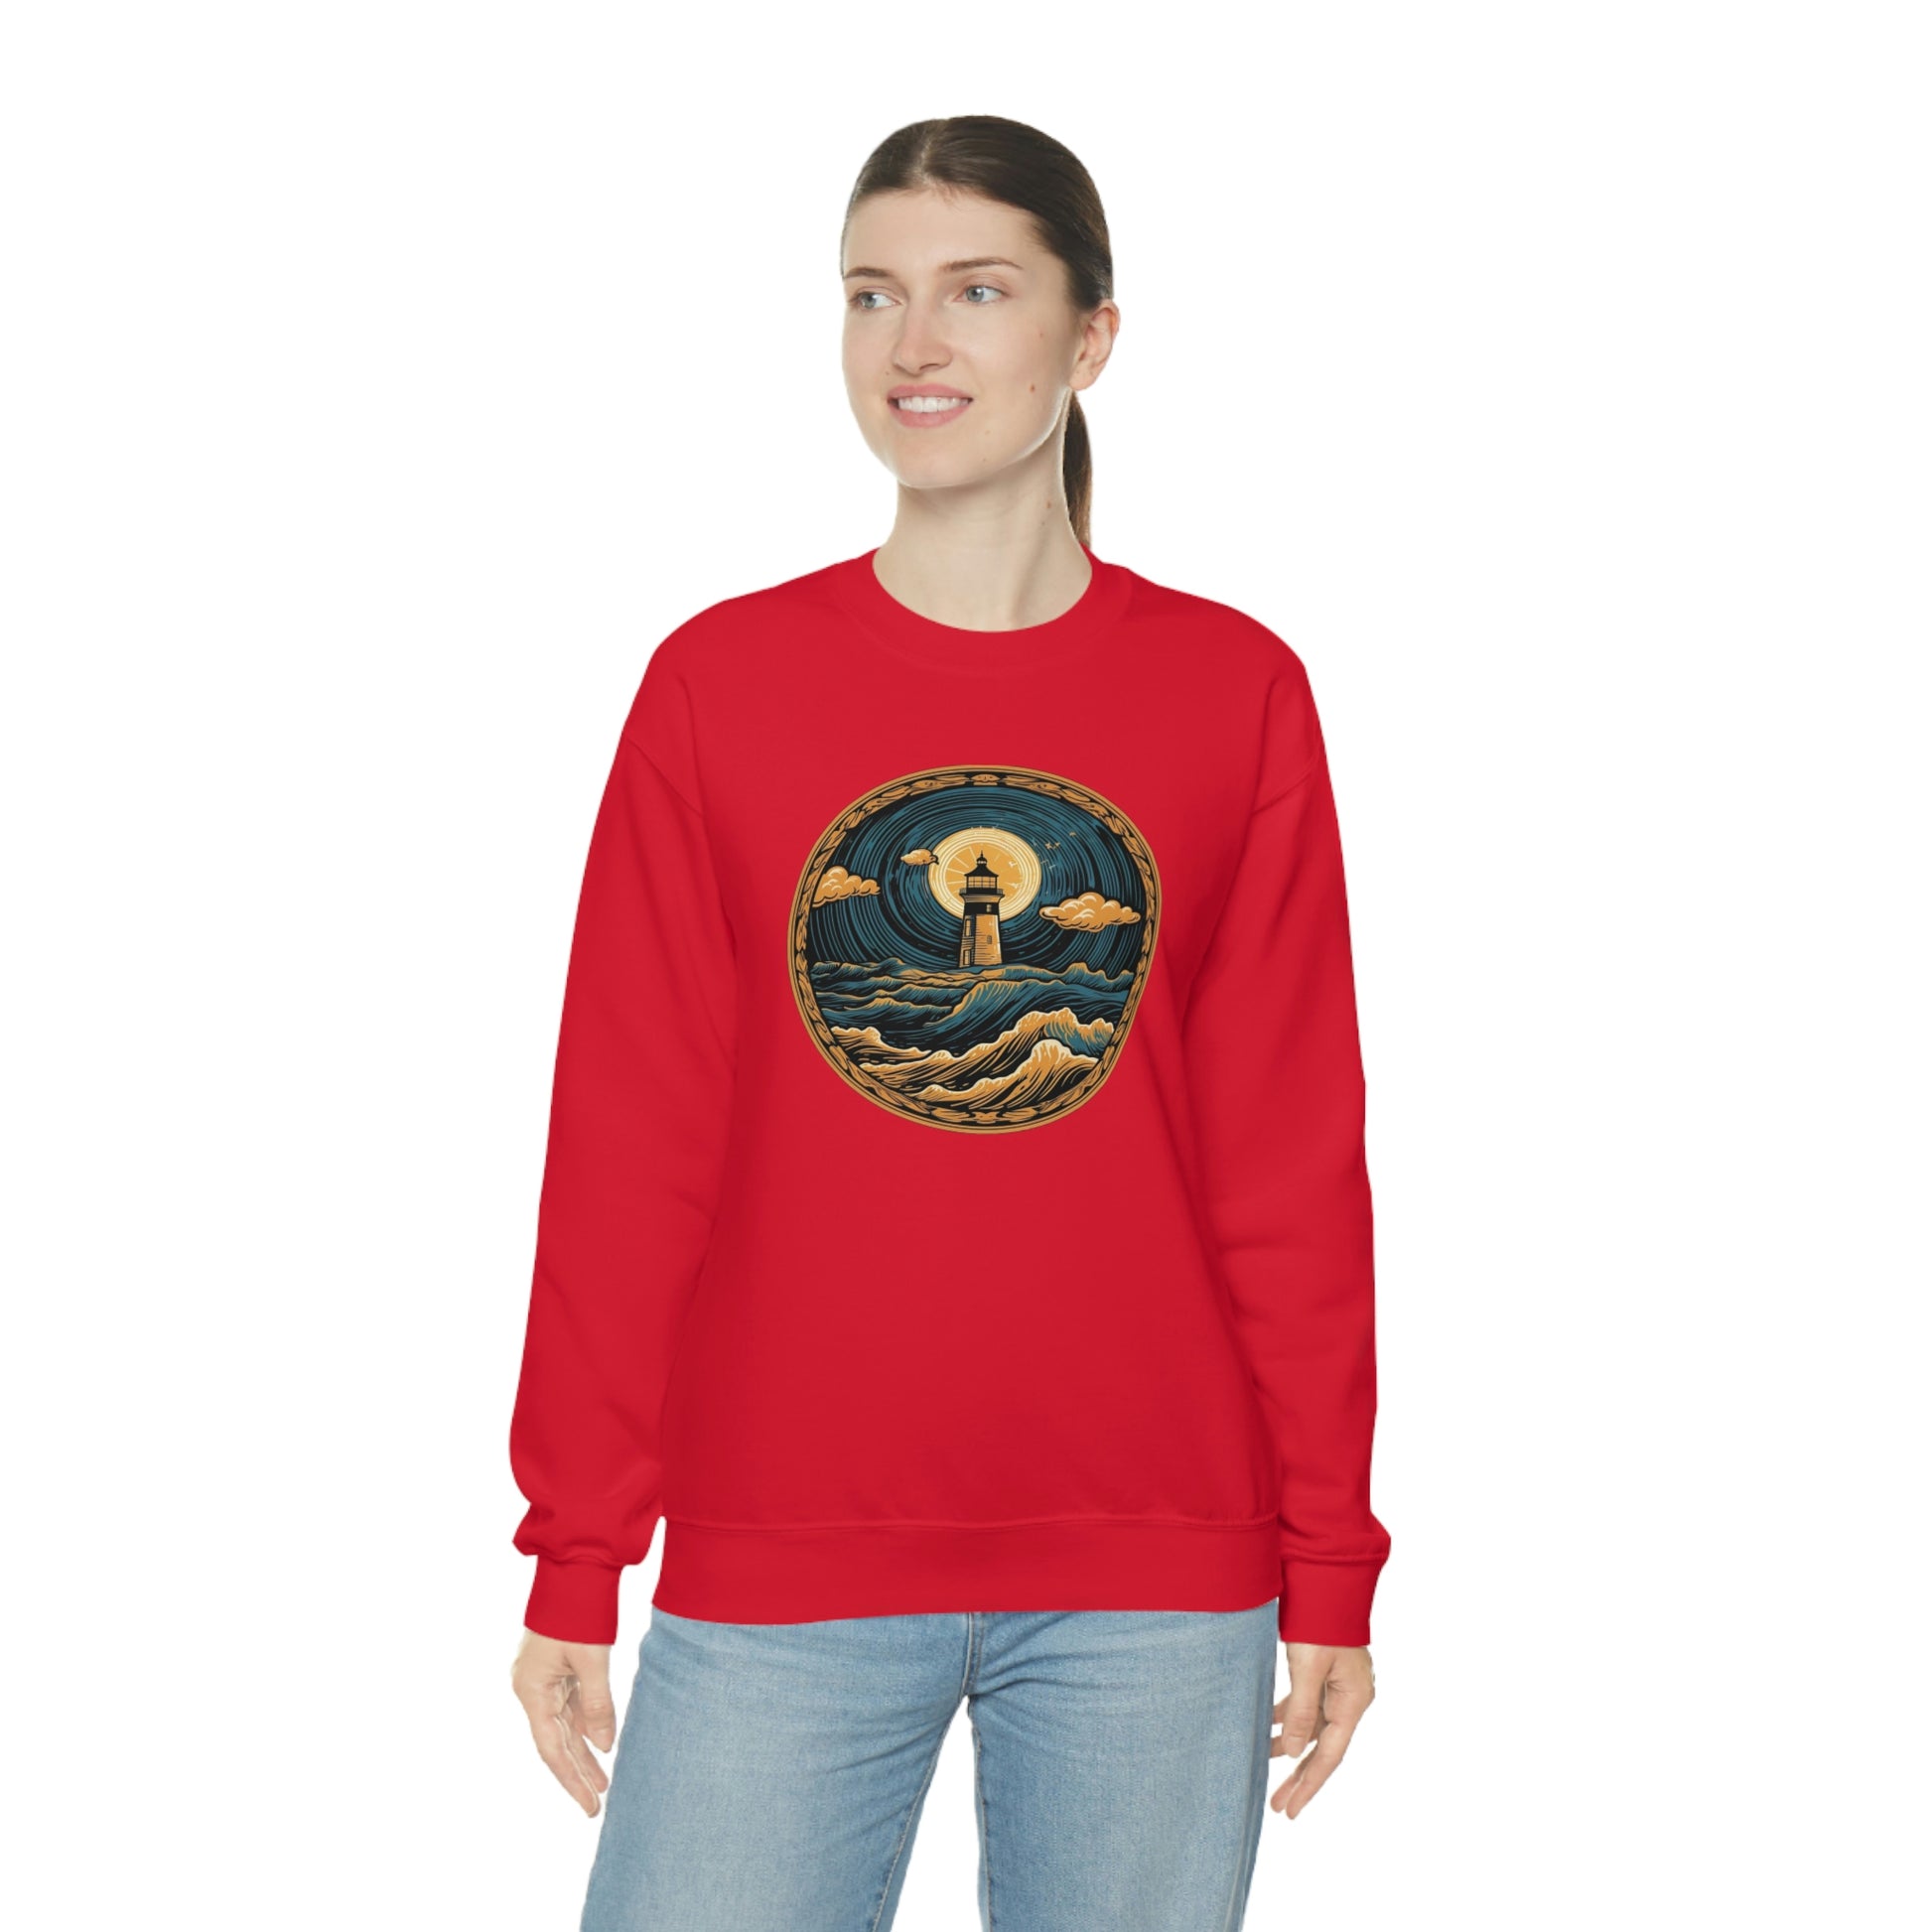 Lighthouse Sweatshirt, Waves Montauk Graphic Crewneck Fleece Cotton Sweater Jumper Pullover Men Women Adult Aesthetic Designer Top Starcove Fashion